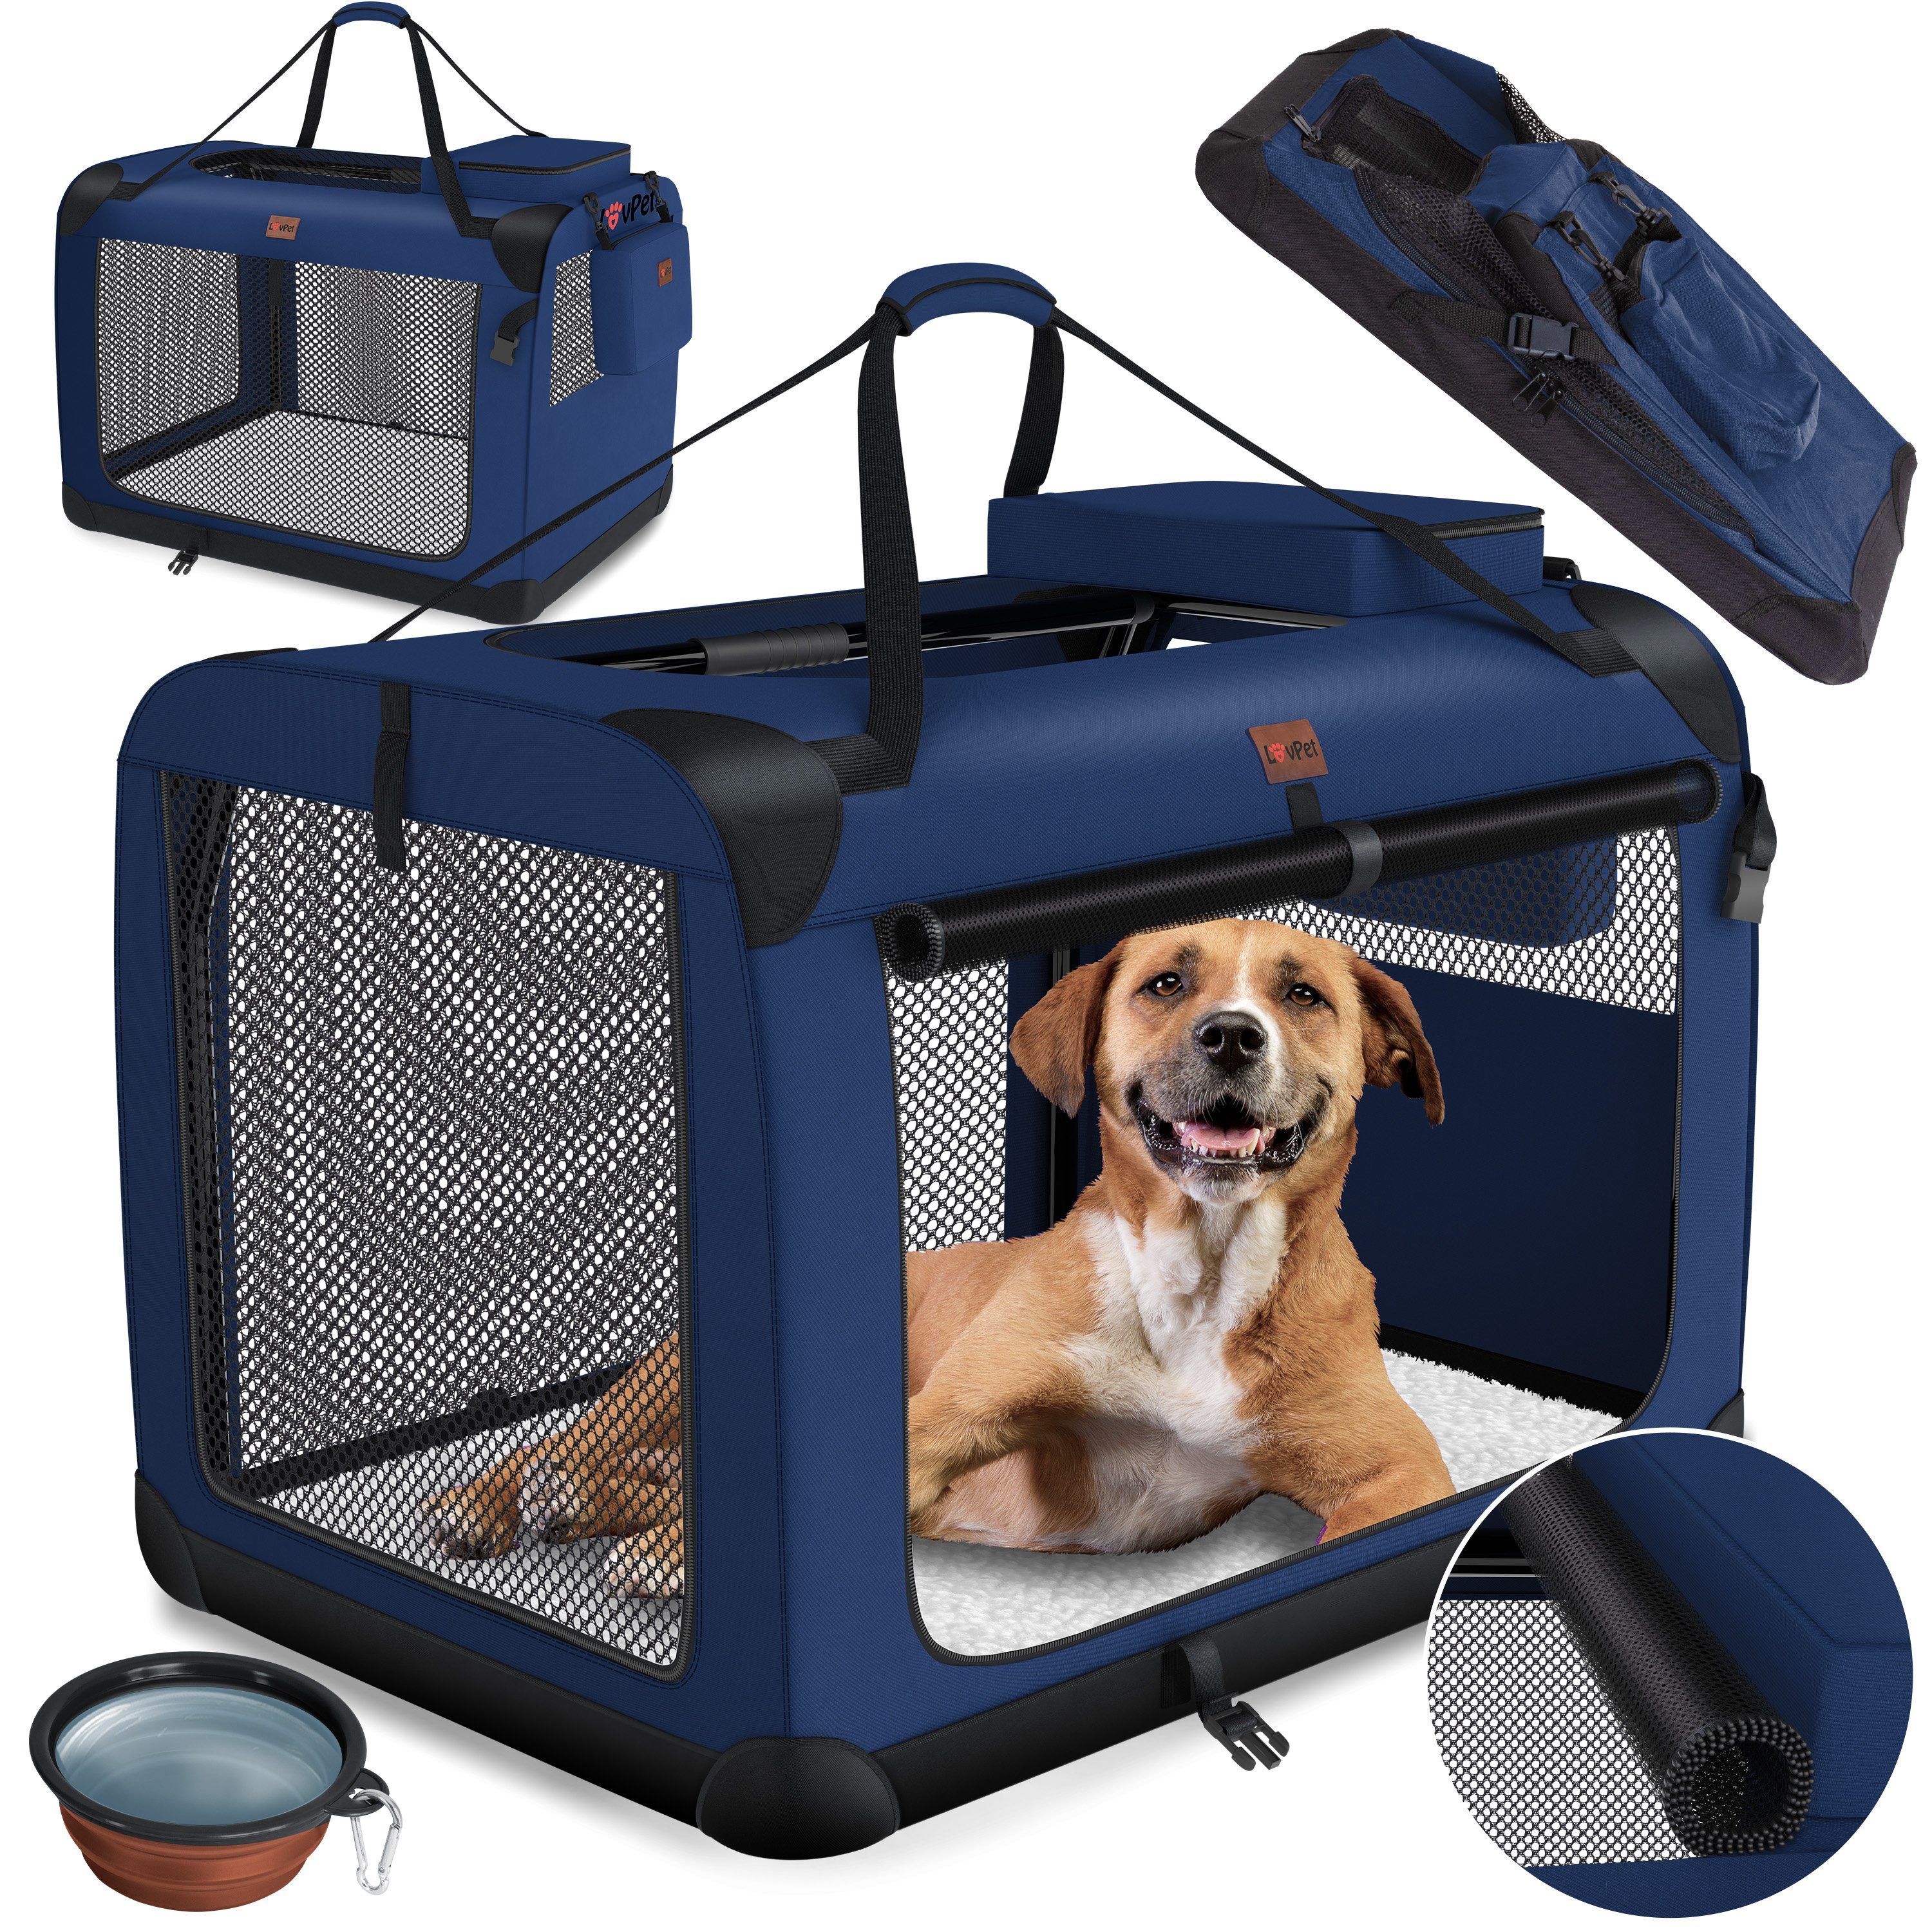 Lovpet Tiertransportbox bis 7 kg, Hundetransportbox faltbar Inkl.Hundenapf  Transporttasche Hundetasche Transportbox für Haustiere, Hunde und Katzen  Haustiertransportbox online kaufen | OTTO